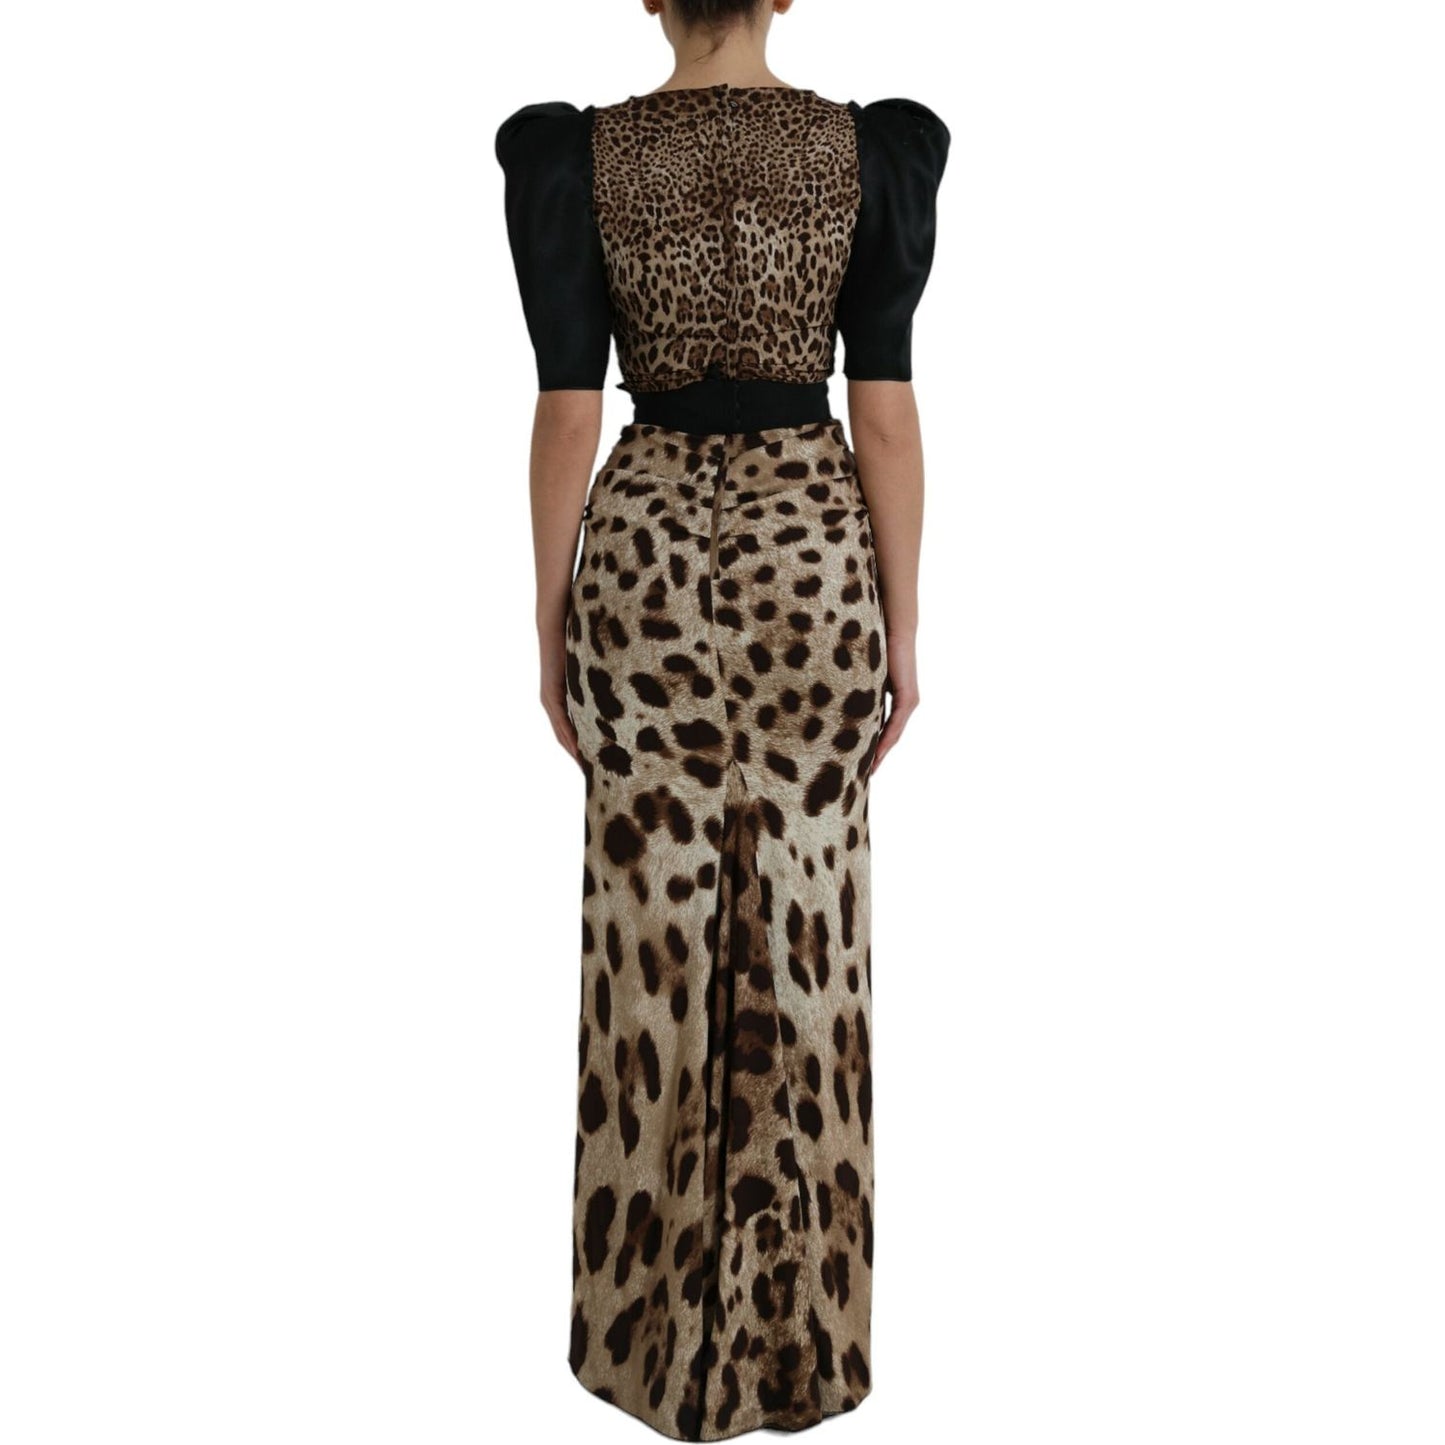 Dolce & Gabbana Silk Leopard Embellished Long Dress black-brown-leopard-embellished-sheath-gown-dress